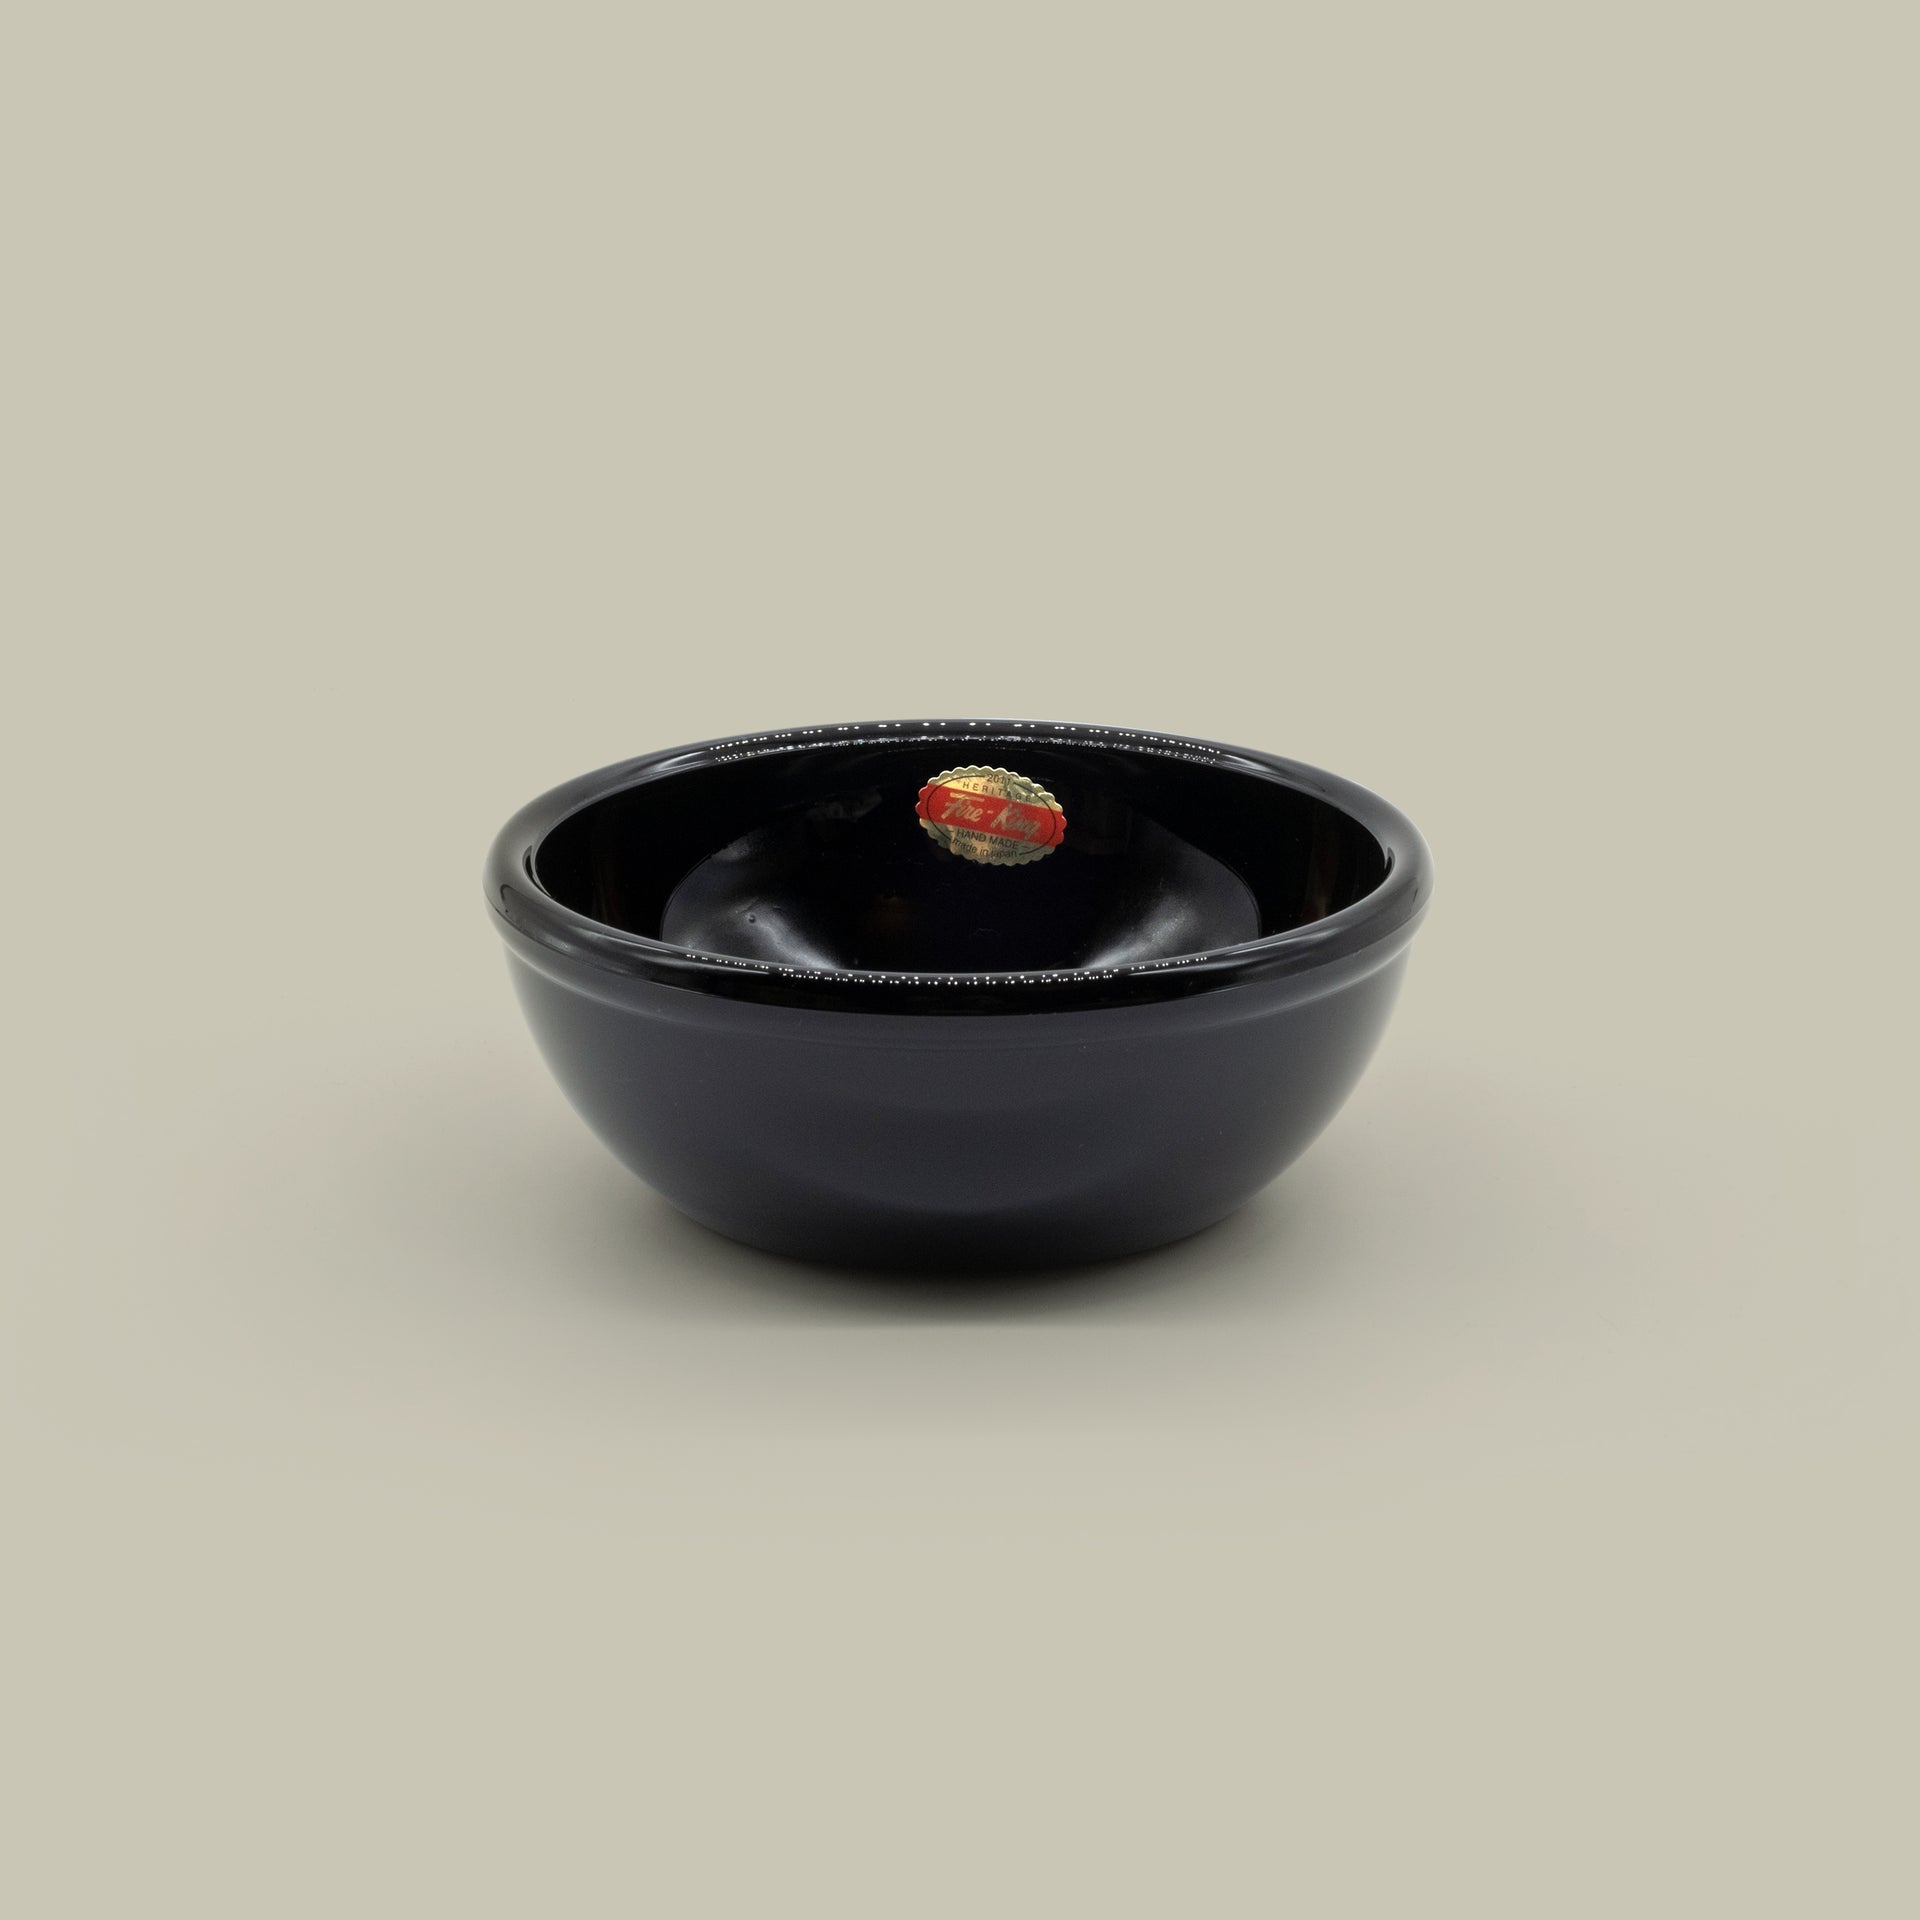 Fire-King Japan -Bowl in Black